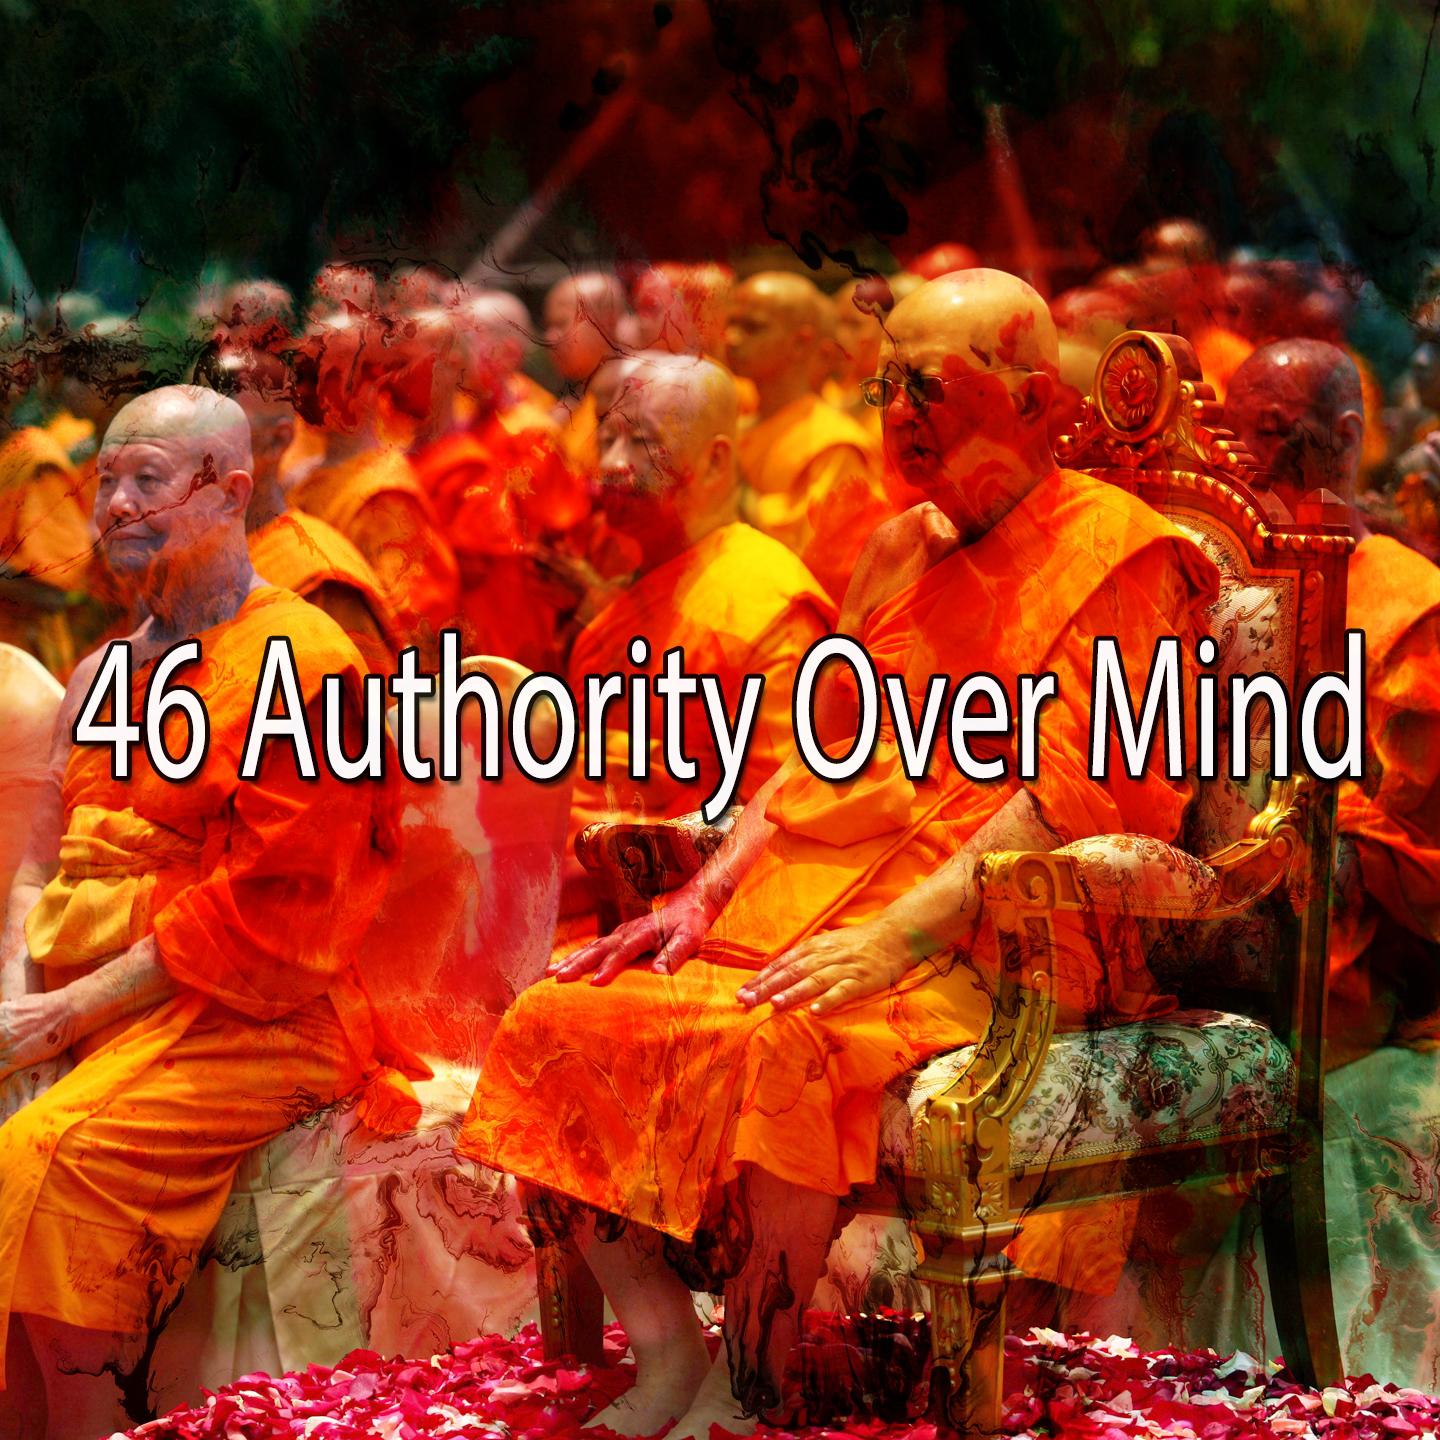 46 Authority over Mind